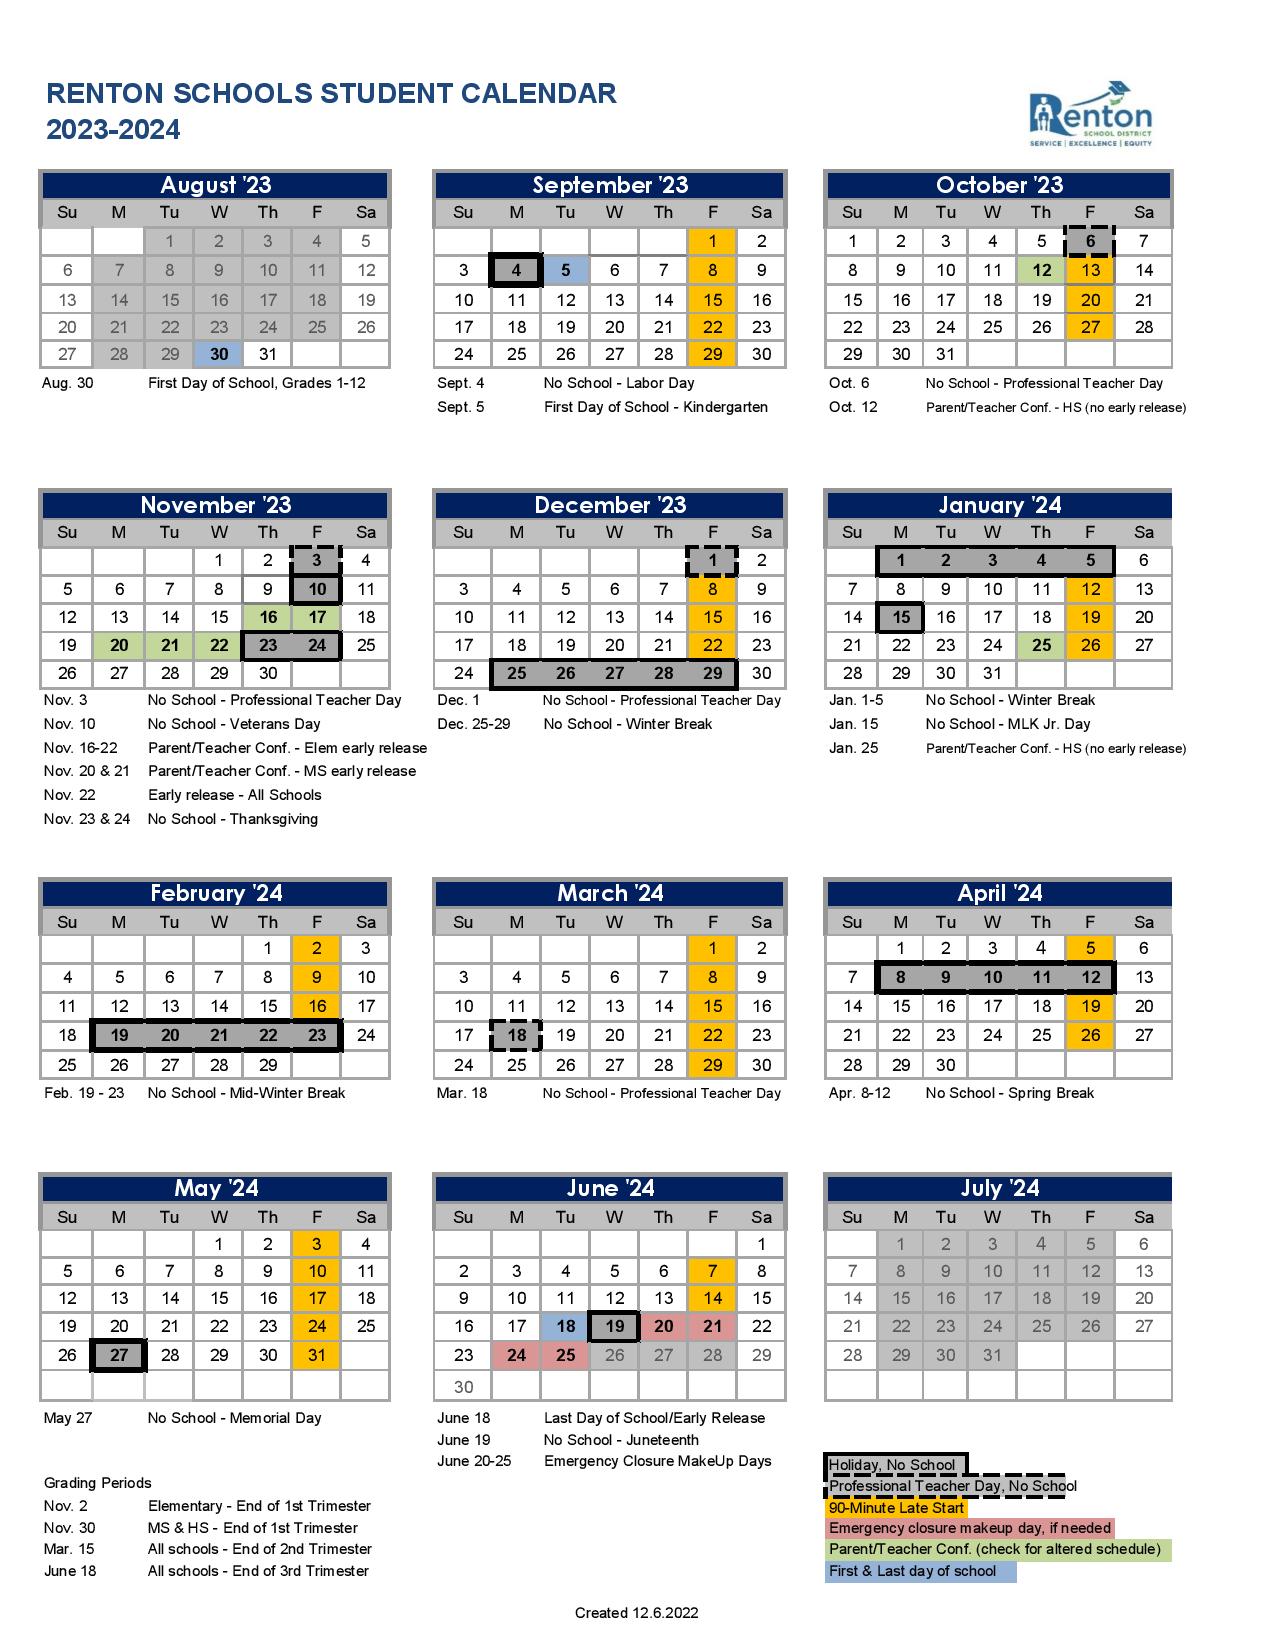 Renton School District Calendar 2023 2024 (Holiday Breaks)